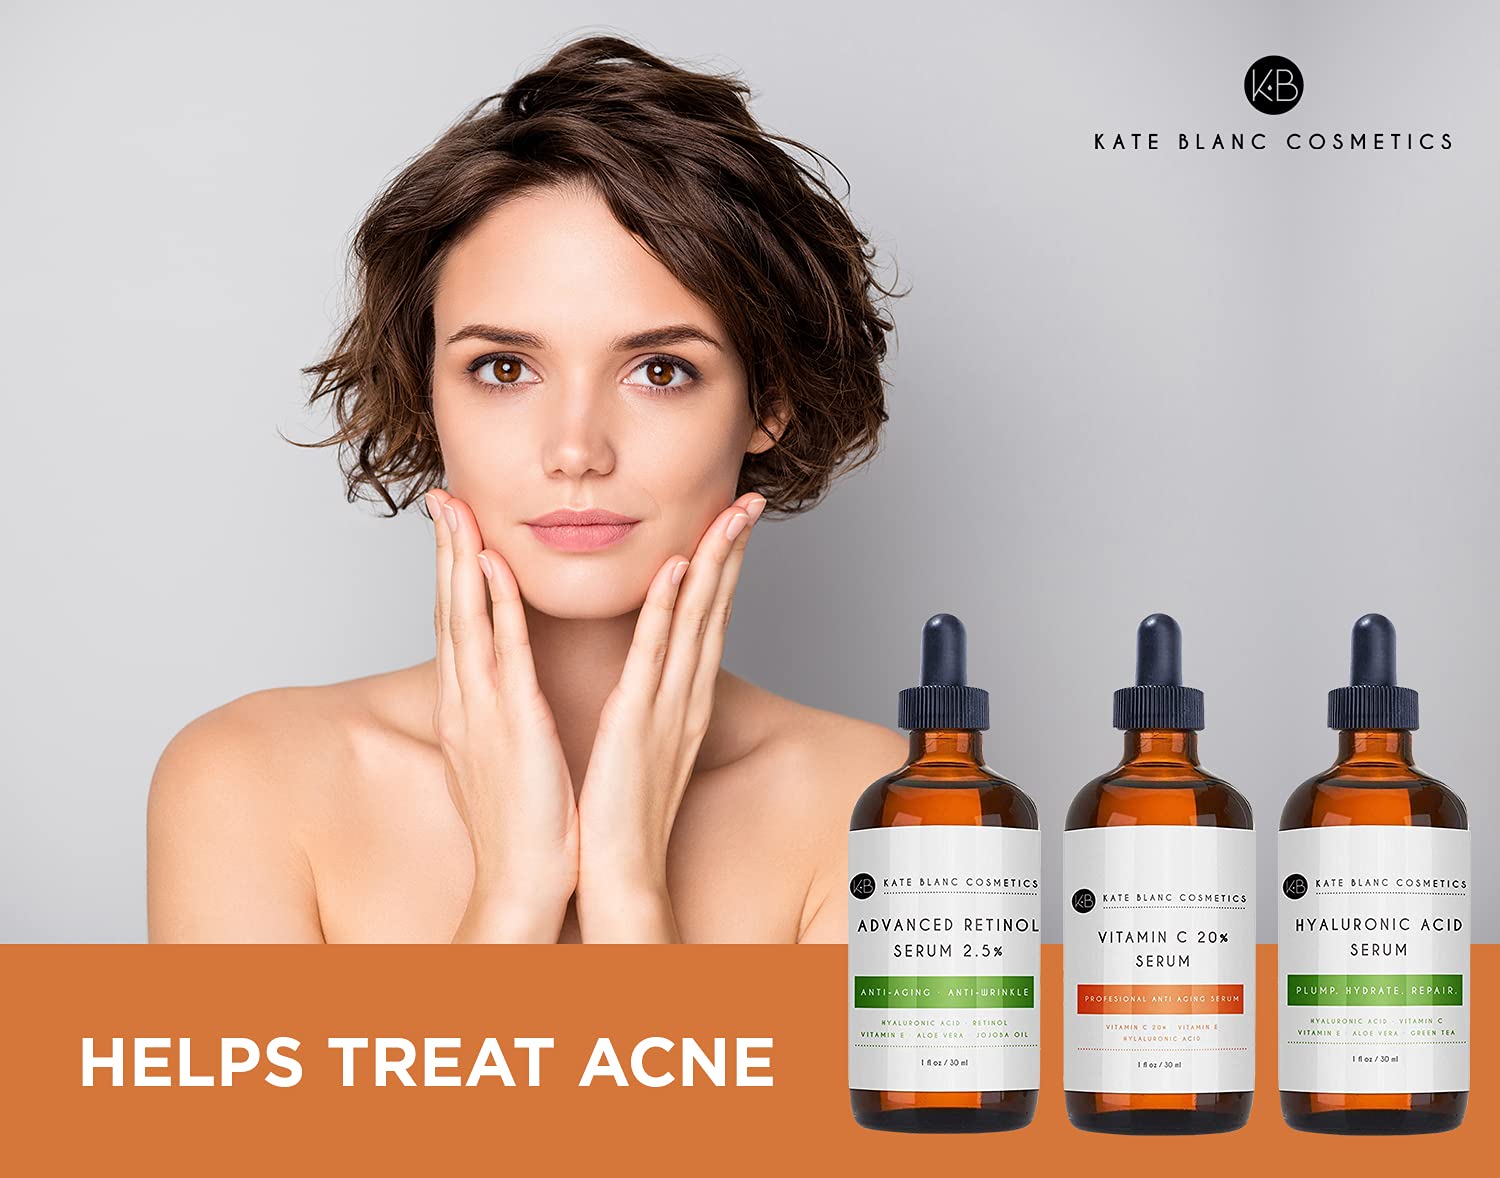 Anti Aging Serum Set for Women  Men - Kate Blanc Cosmetics - 98% Natural, 72% Organic. Vitamin C Serum, Hyaluronic Acid Serum, Retinol Serum for Face. Anti Wrinkle  Dark Spot Corrector